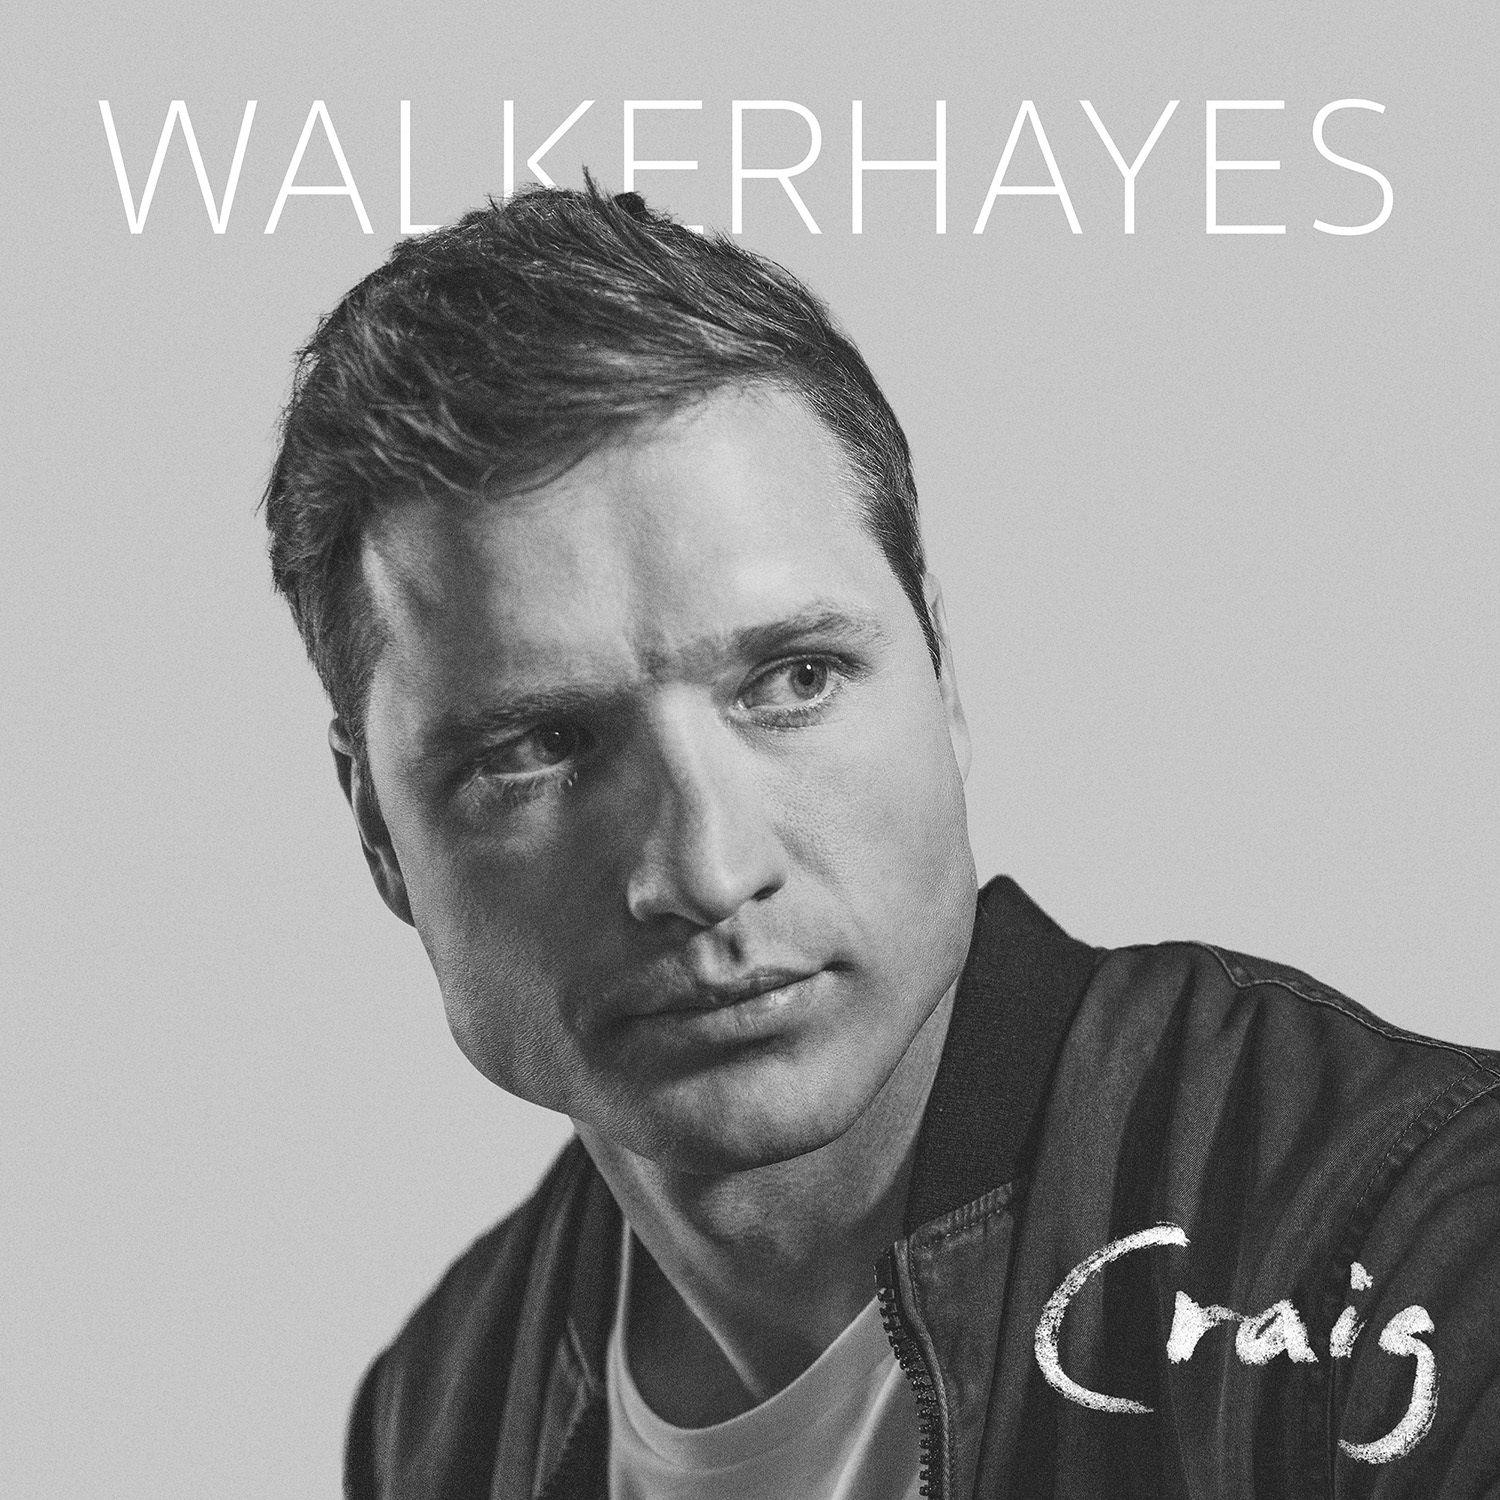 Walker Hayes Dedicates Next Single to 'Craig'. The Latest News